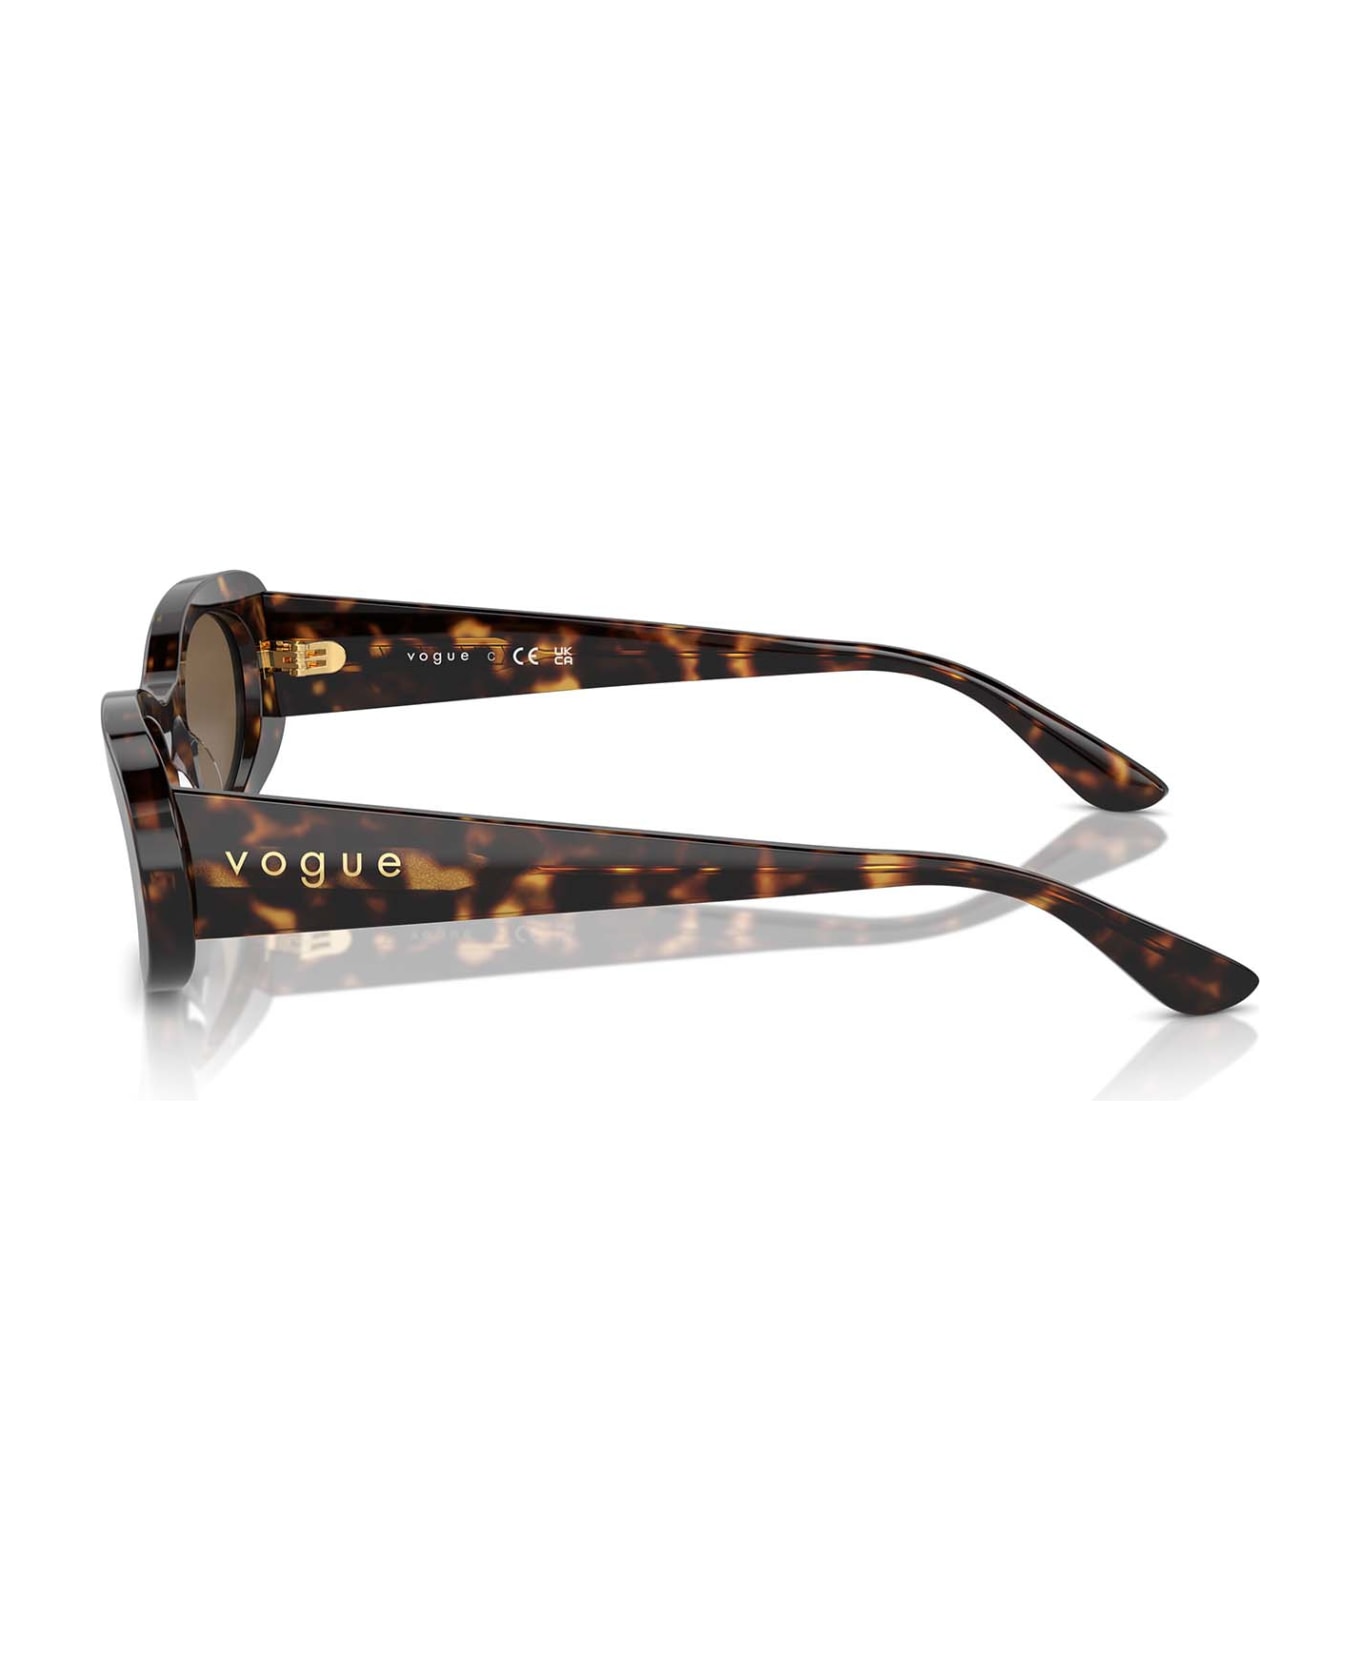 Vogue Eyewear Vo5582s Dark Havana Sunglasses - Dark Havana